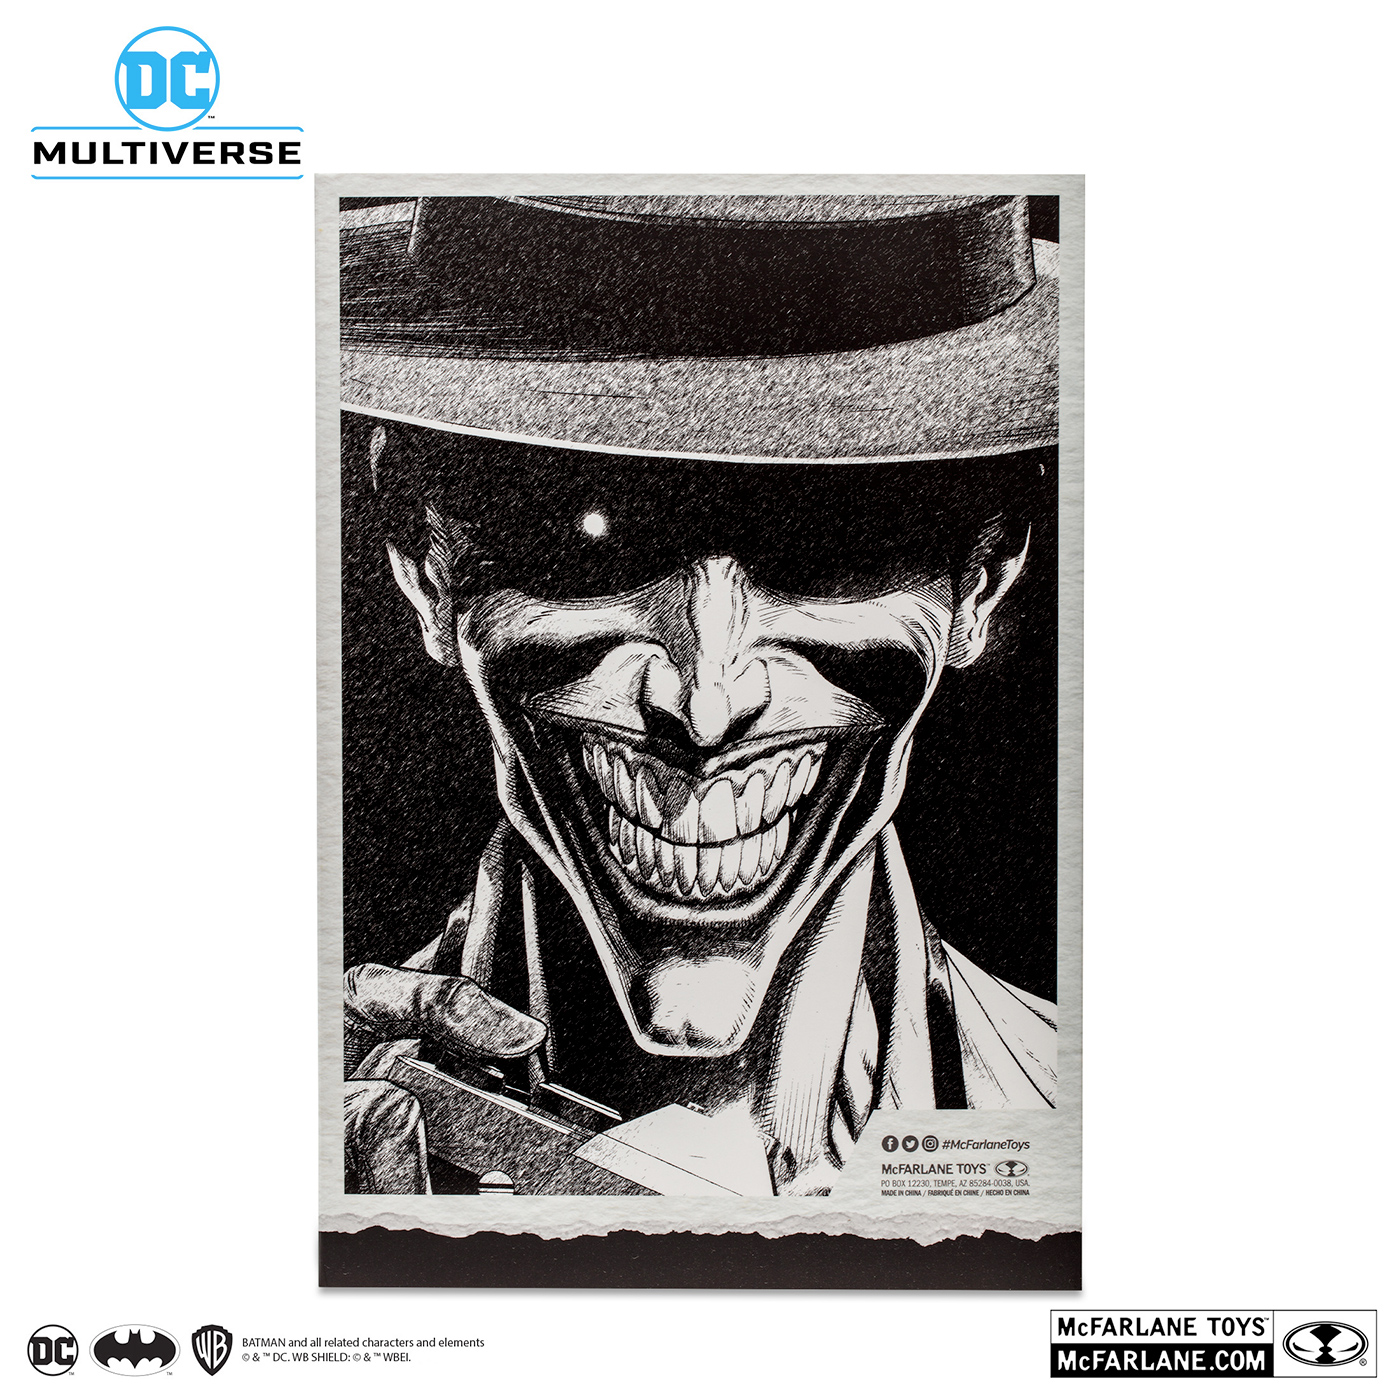 The Joker Comedian Designed by Jason Fabok Sketch Edition Gold Label